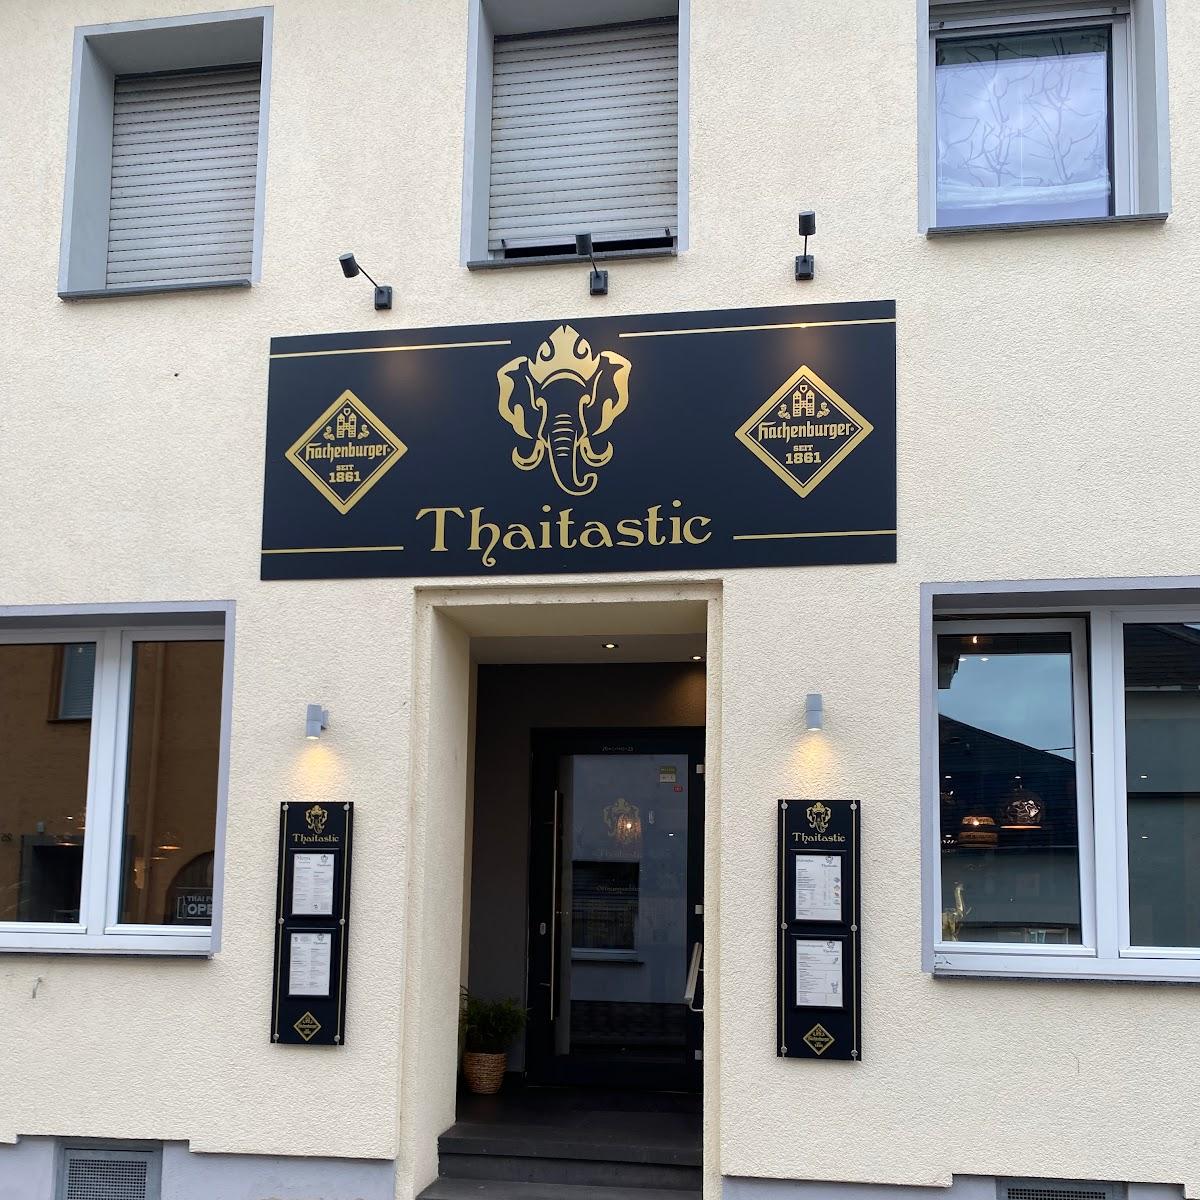 Restaurant "Thaitastic" in Vallendar